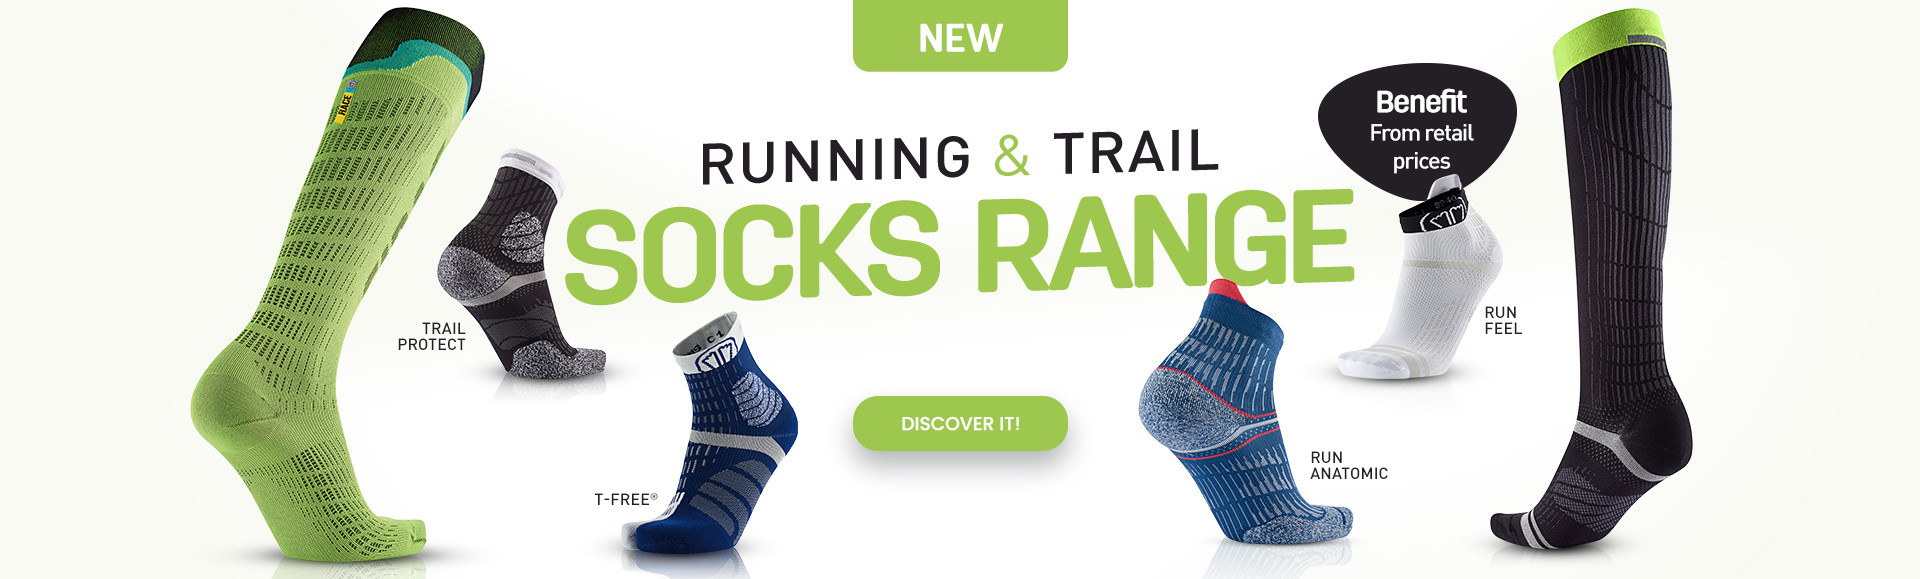 New running and trail socks range!